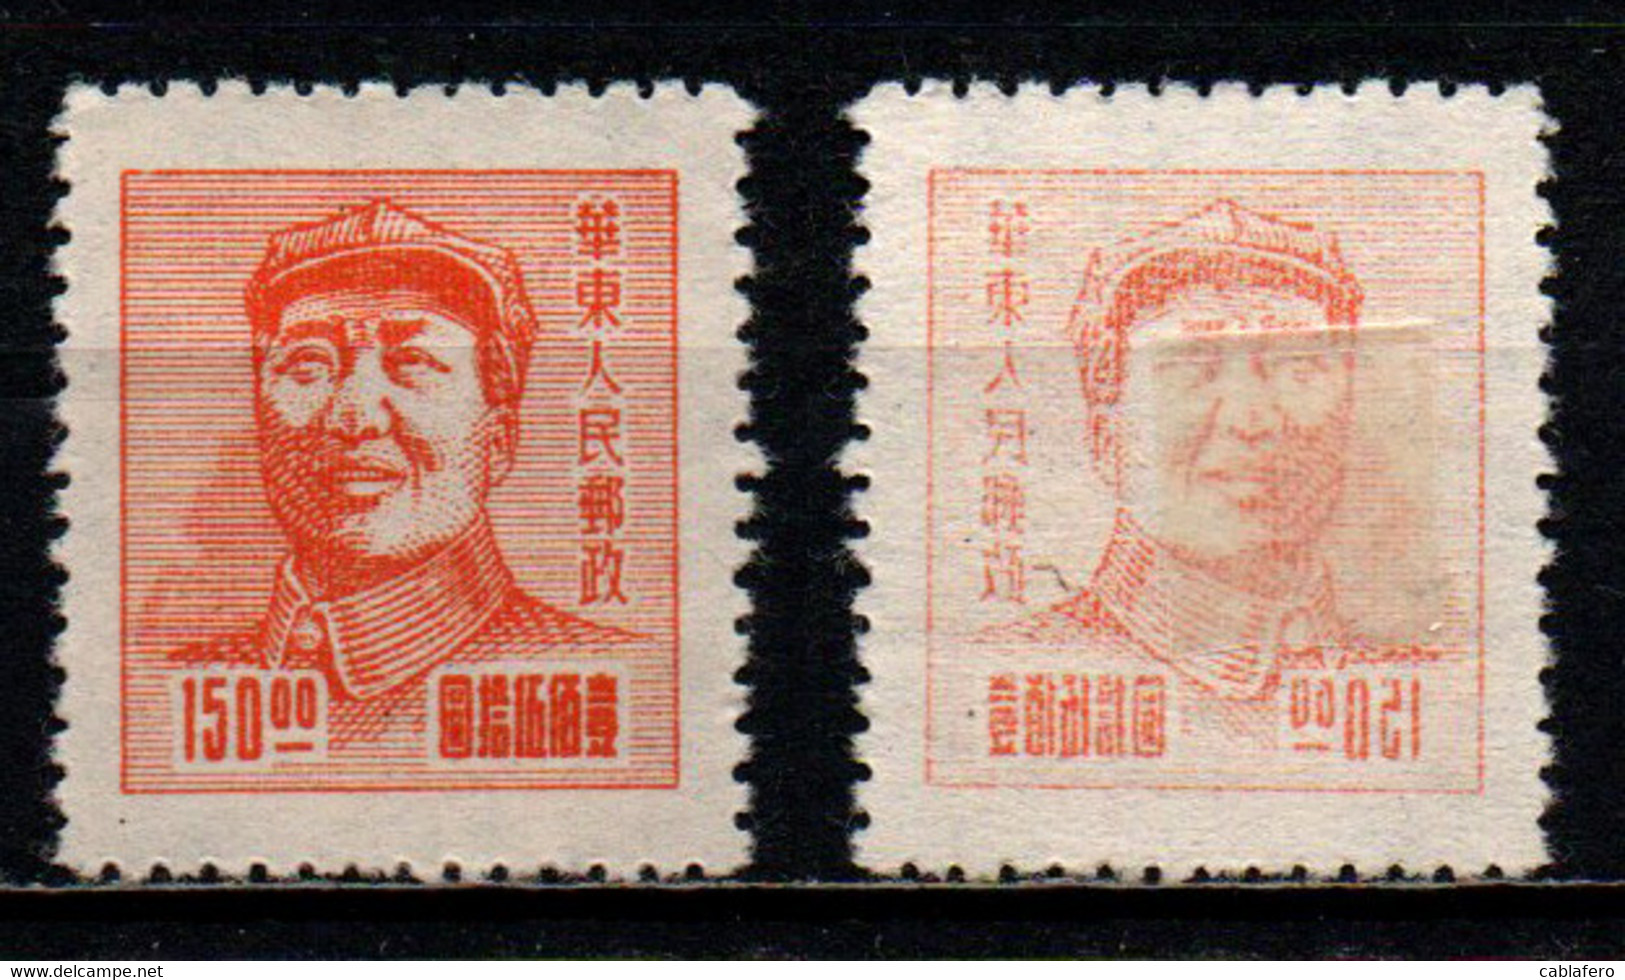 CINA ORIENTALE - 1949 - MAO TSE-TUNG - DECALCO - VARIETA' - SENZA GOMMA - China Oriental 1949-50